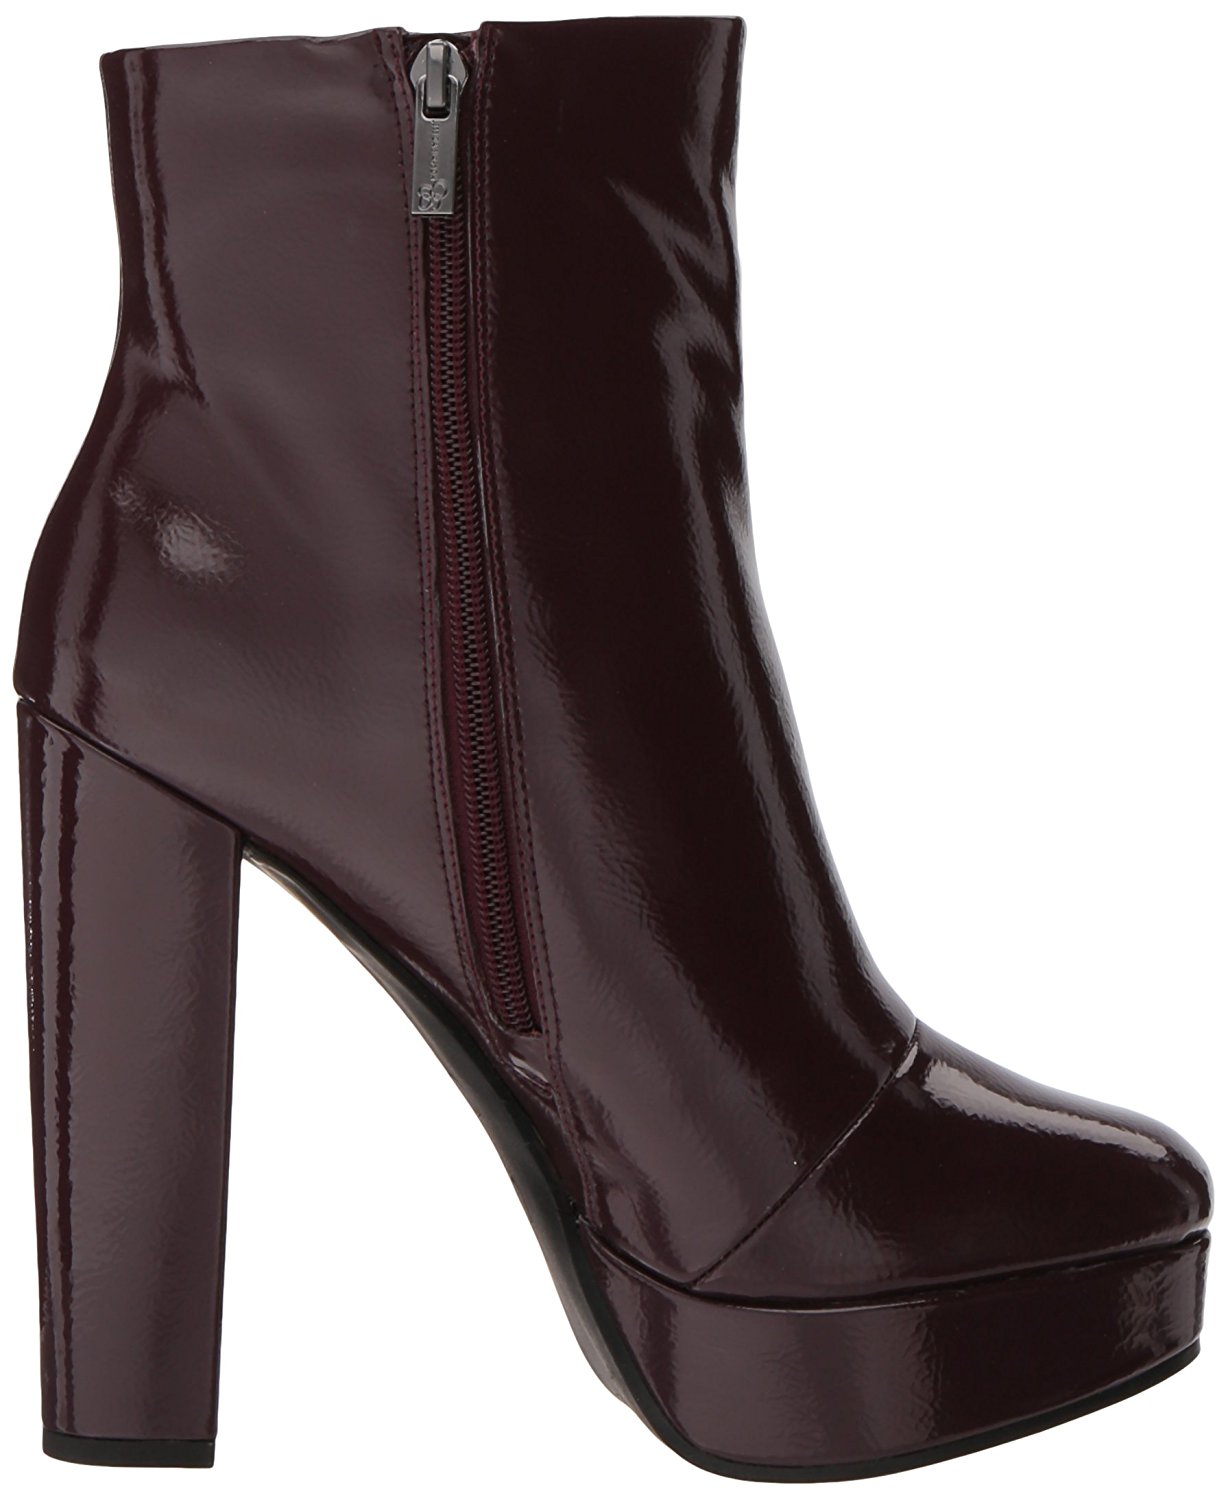 Jessica Simpson Womens Sebille Leather Square Toe Ankle Fashion Boots | eBay1228 x 1500